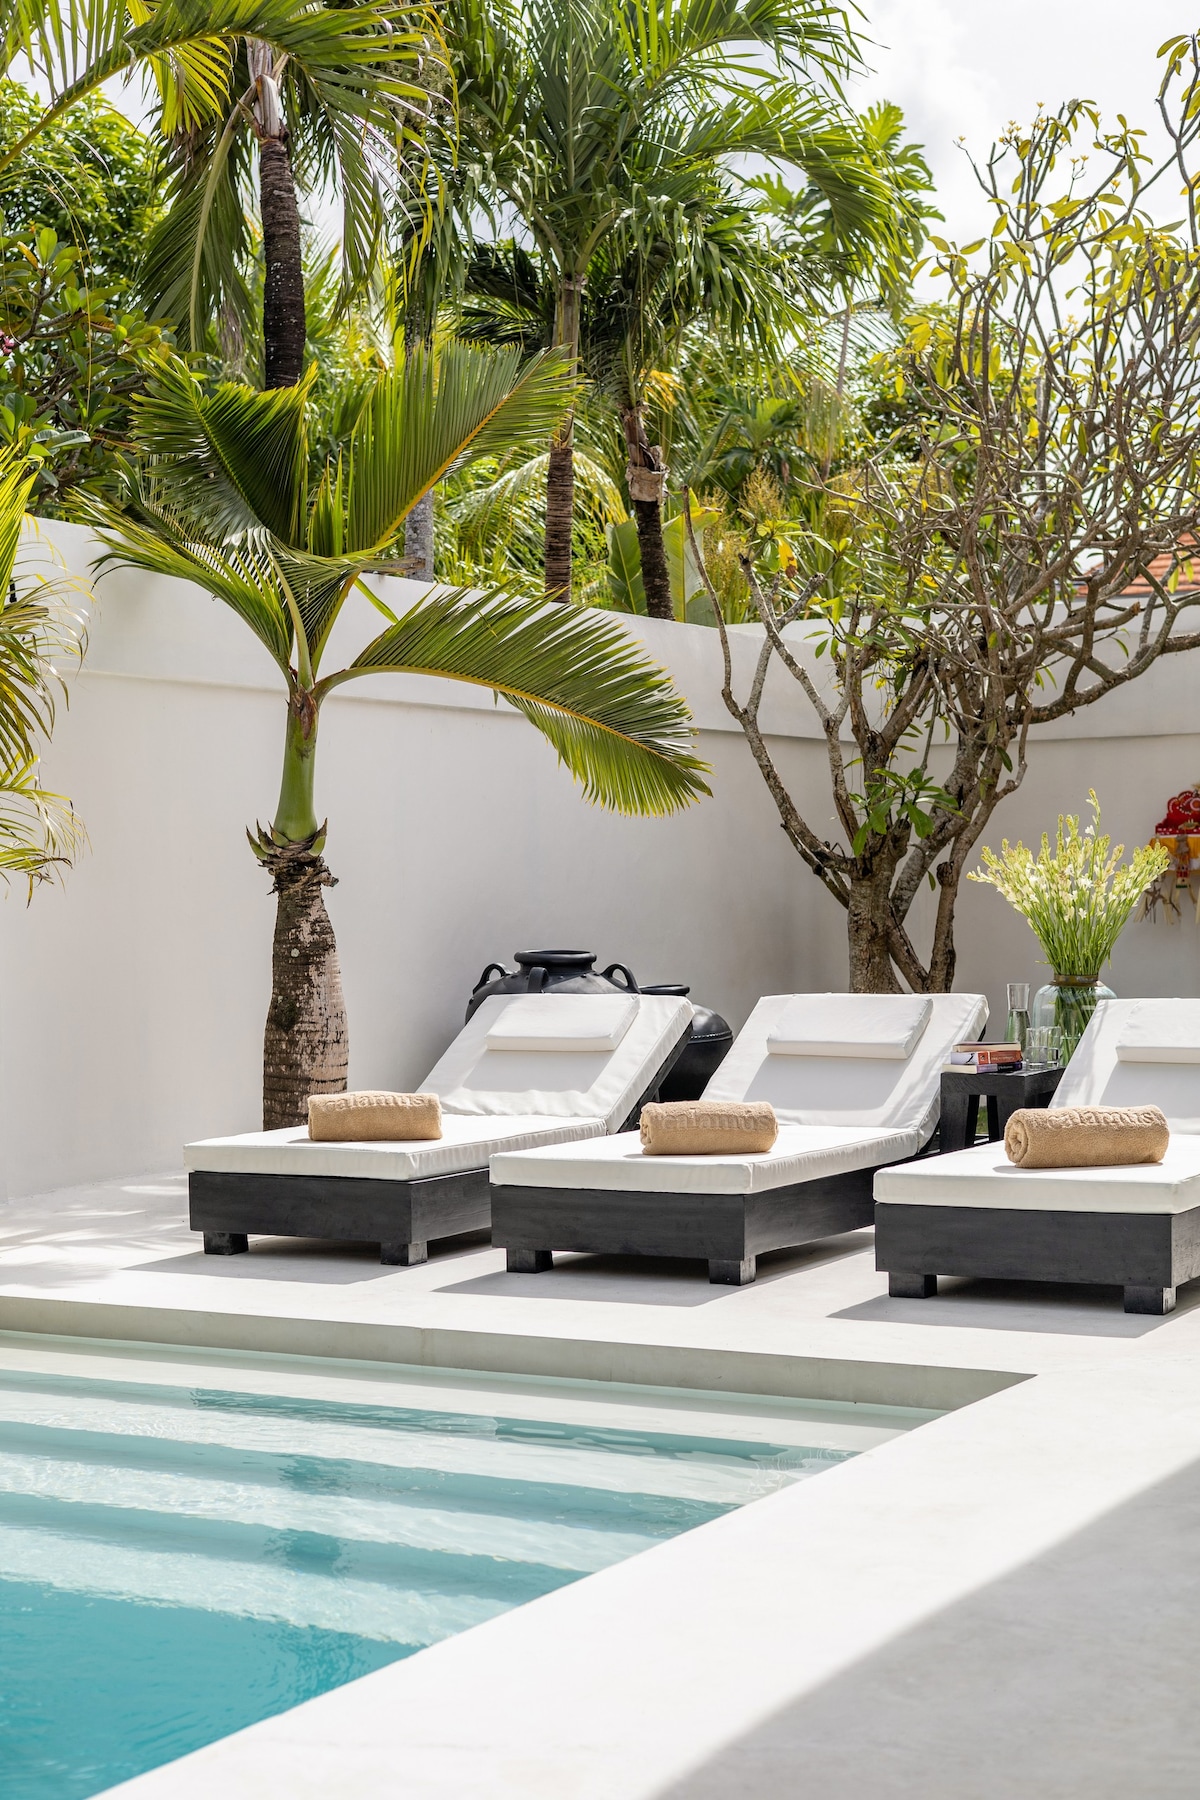 Calamus - Tropical minimalistic Villa in Bali